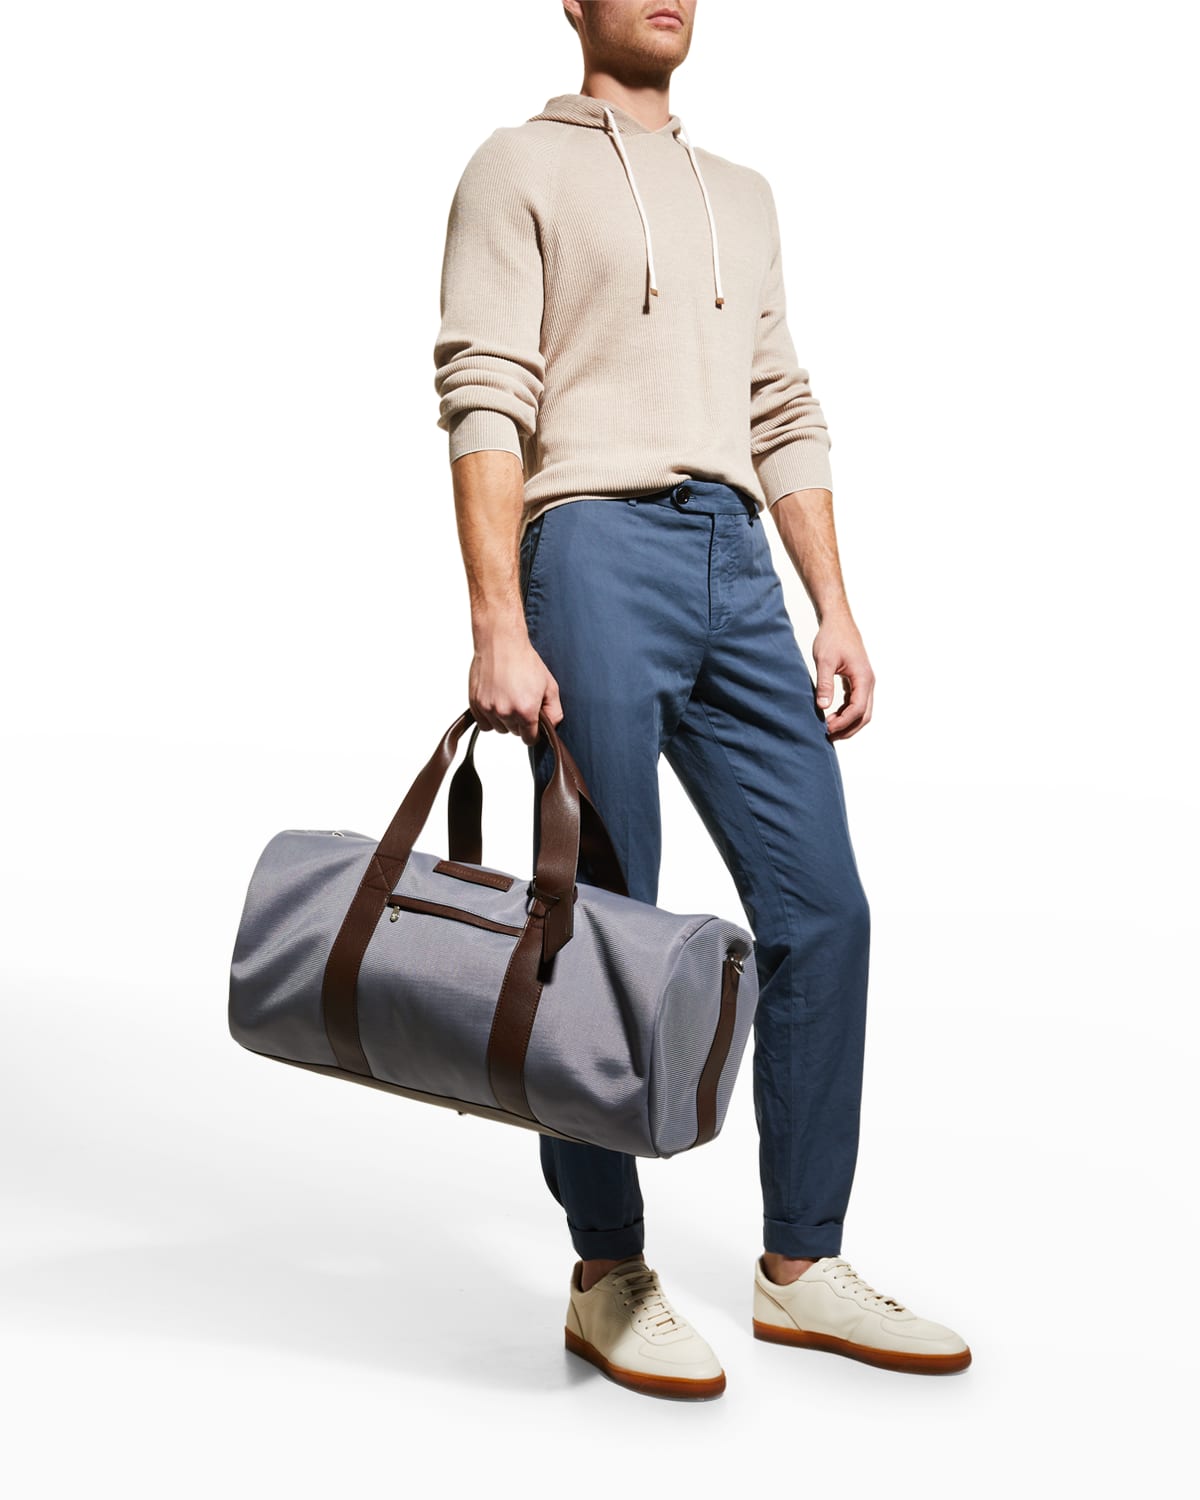 Gray Leather Bag | Neiman Marcus